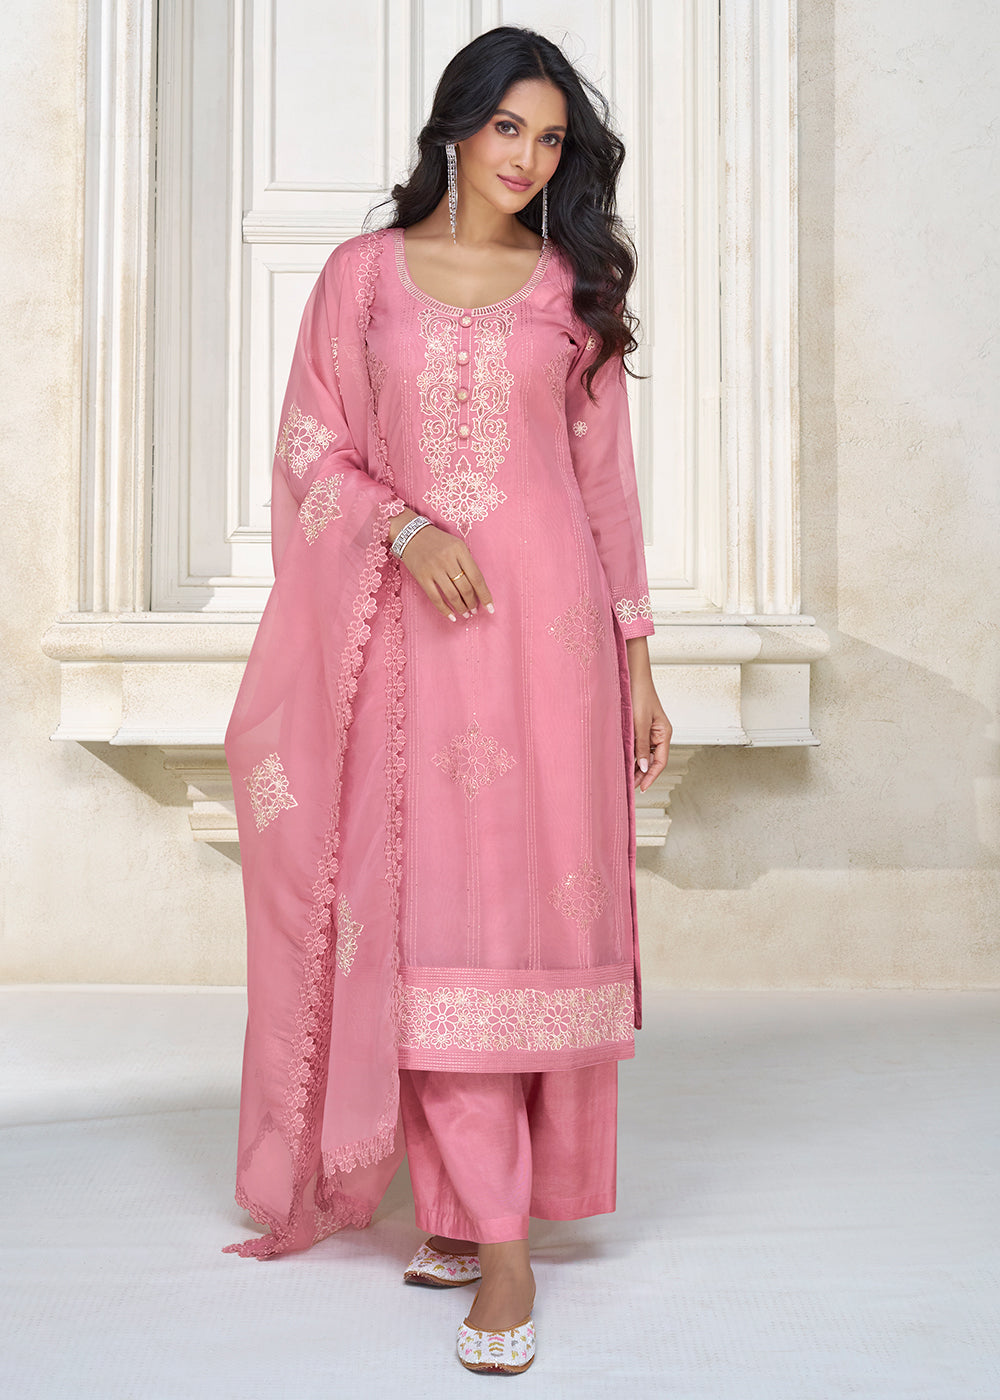 Buy Now Pastel Pink Organza Silk Designer Salwar Suit Online in USA, UK, Canada, Germany, Australia & Worldwide at Empress Clothing.